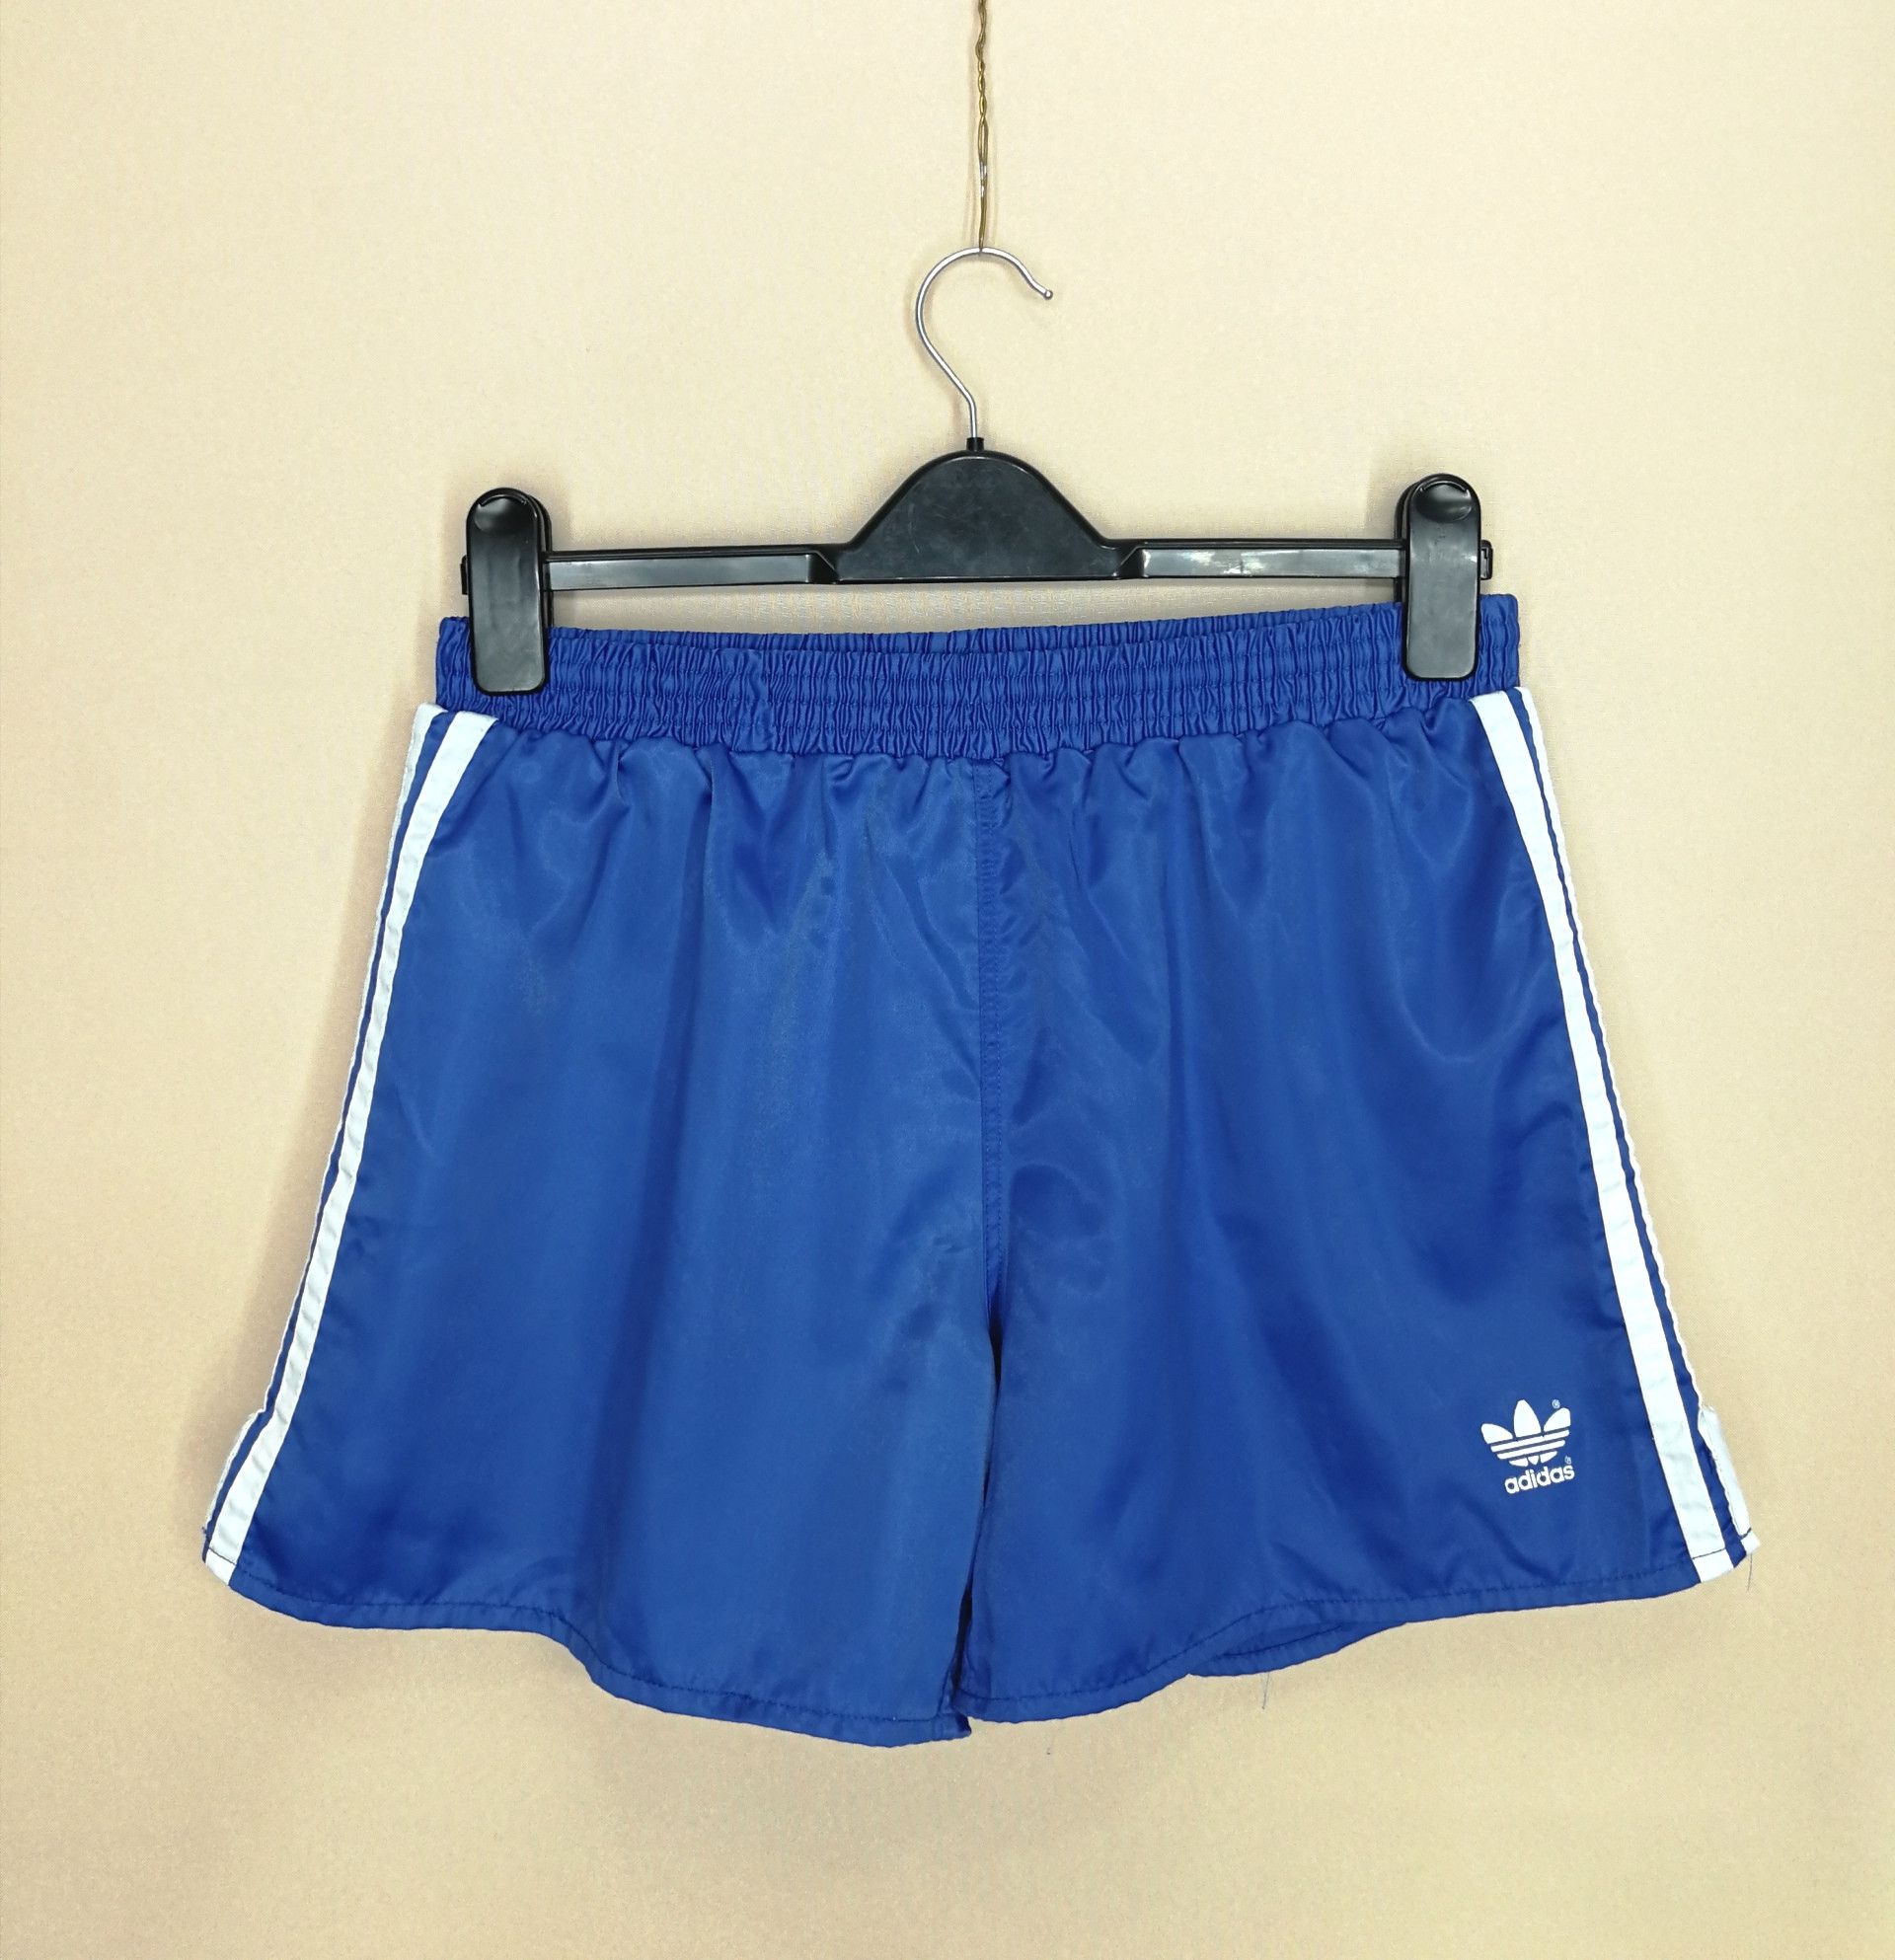 Adidas Vintage 80's Adidas Shorts Blue Yugoslavia Size US 32 / EU 48 - 1 Preview